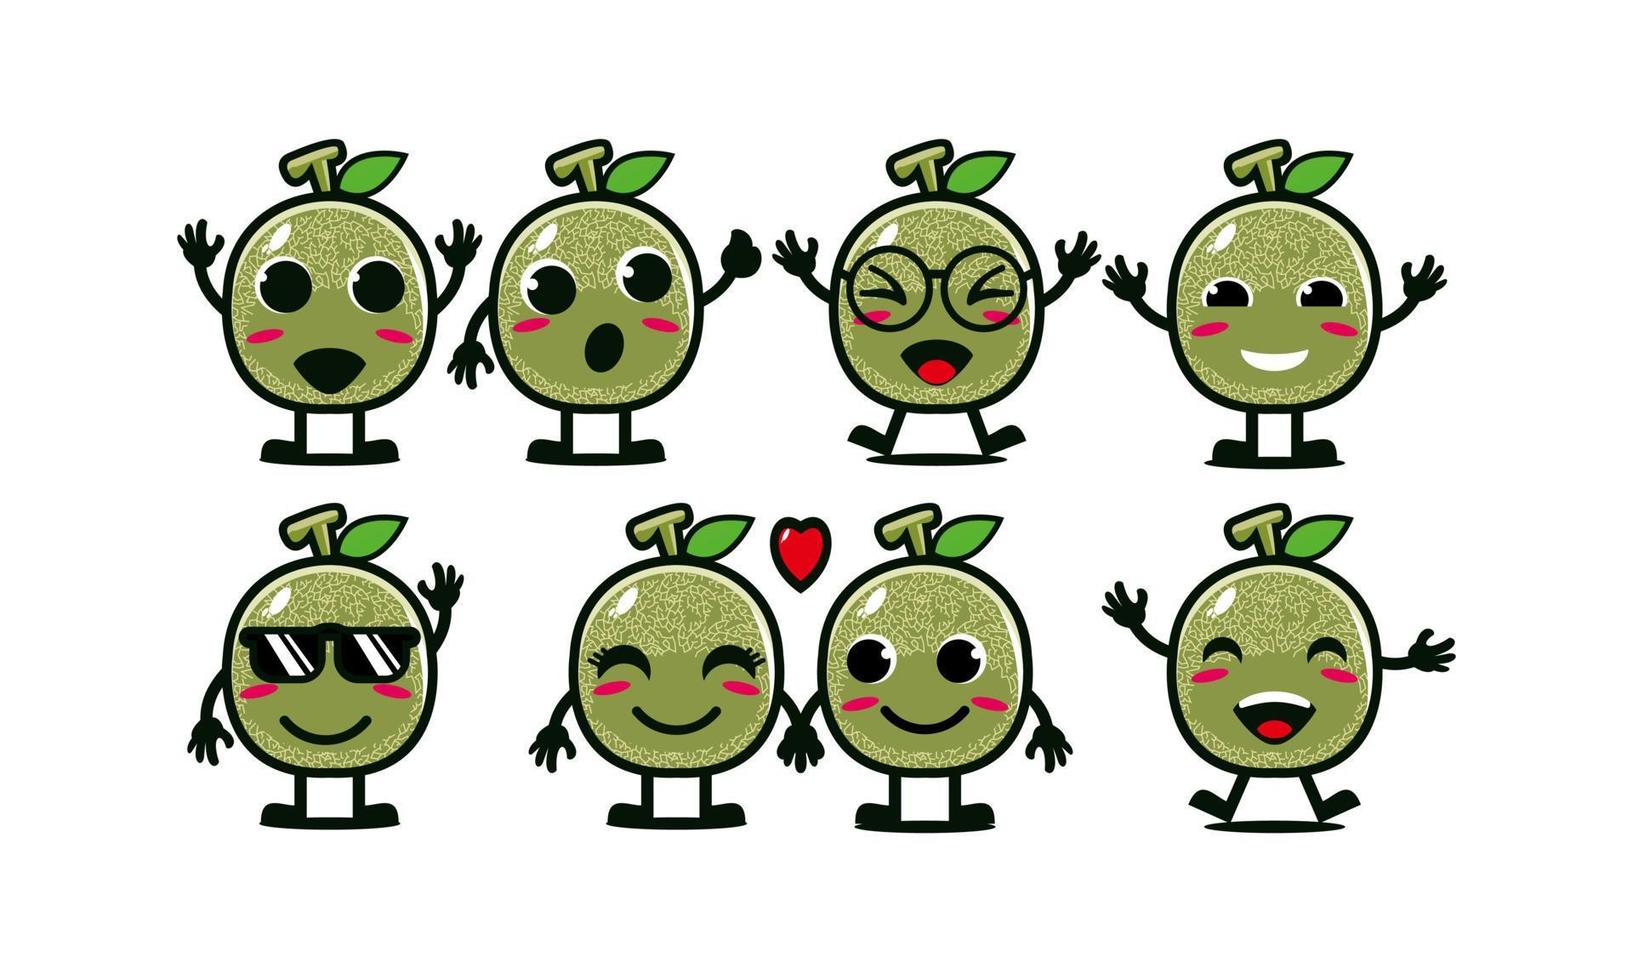 lindo sonriente divertido melón conjunto colección.vector plano caricatura cara personaje mascota ilustración .aislado sobre fondo blanco vector